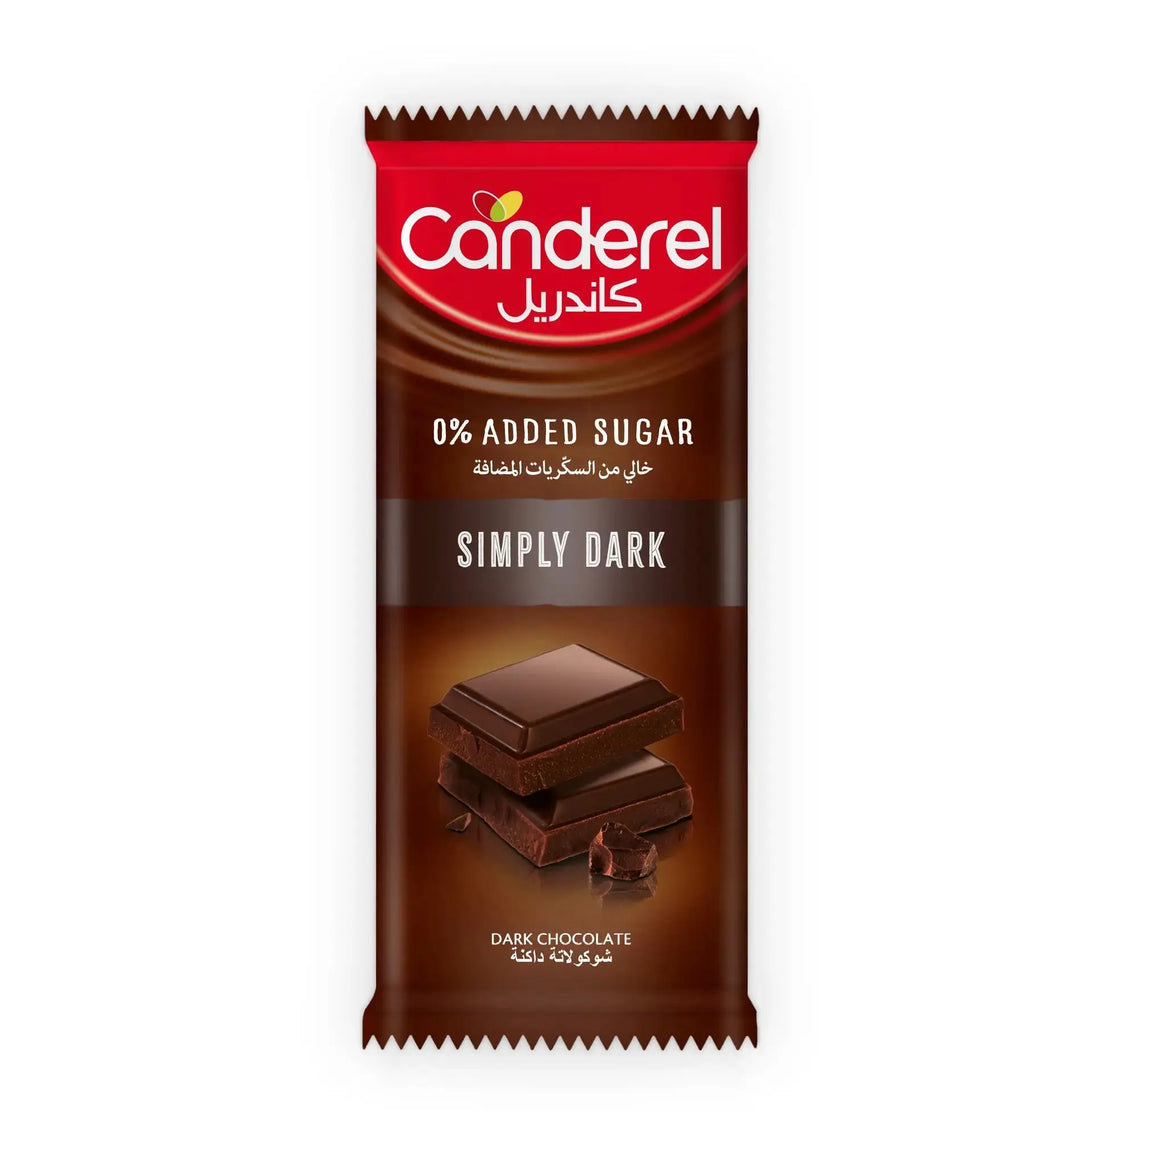 Canderel Chocolate Simply Dark - 100g Canderel